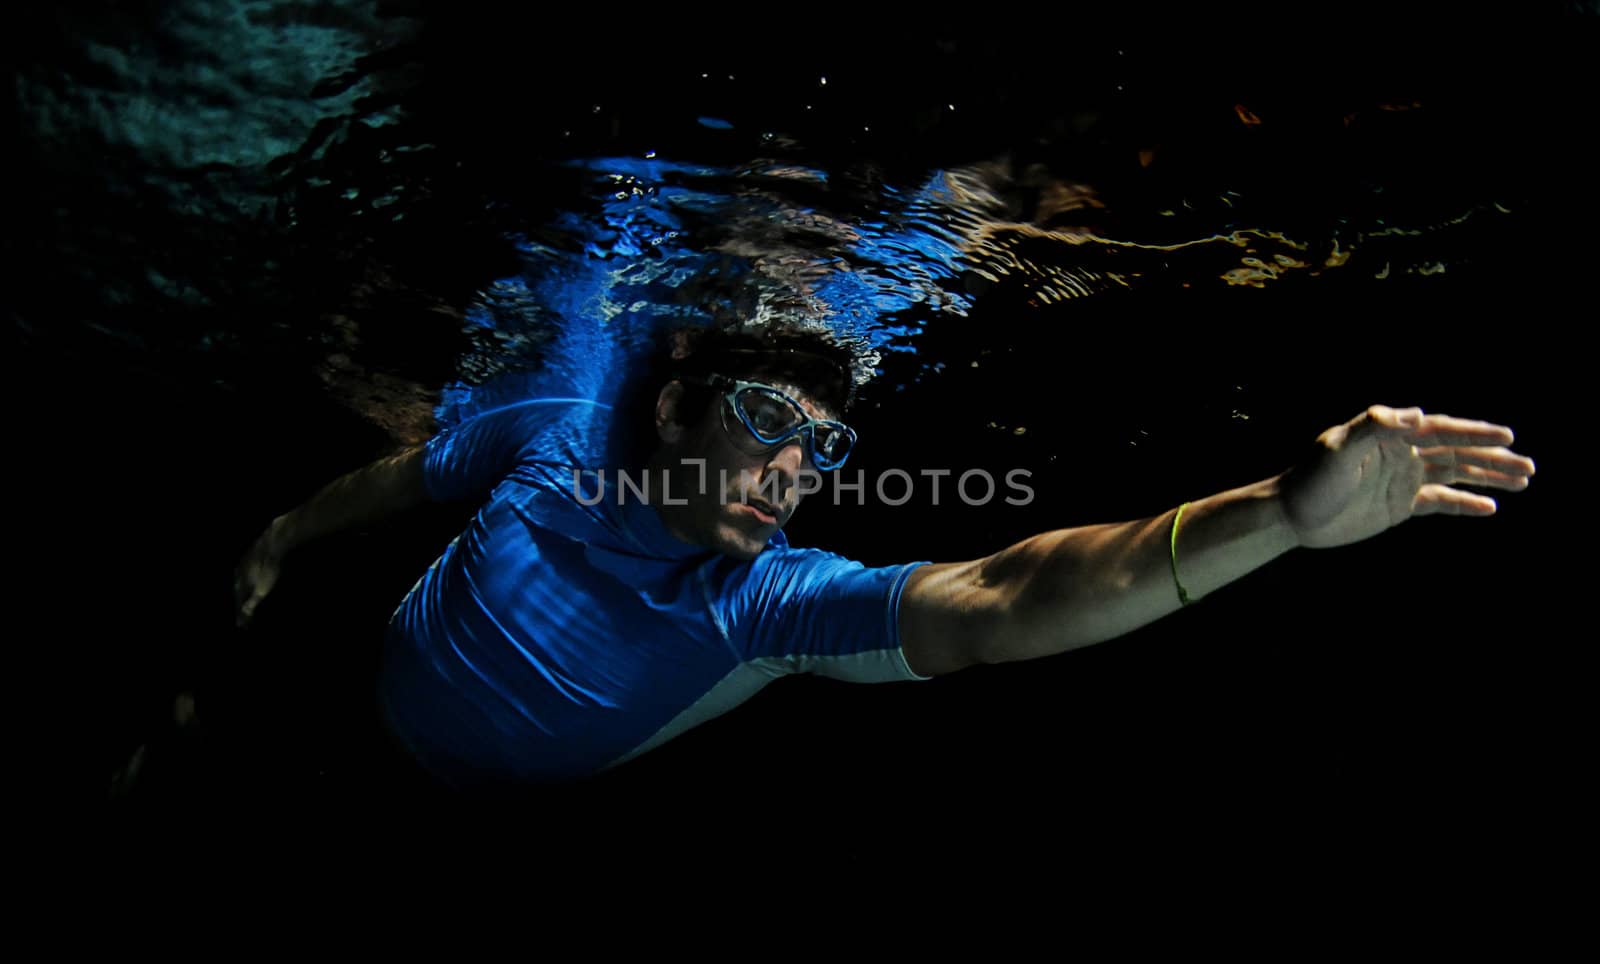 Man swimming underwater in dark pool for exercise